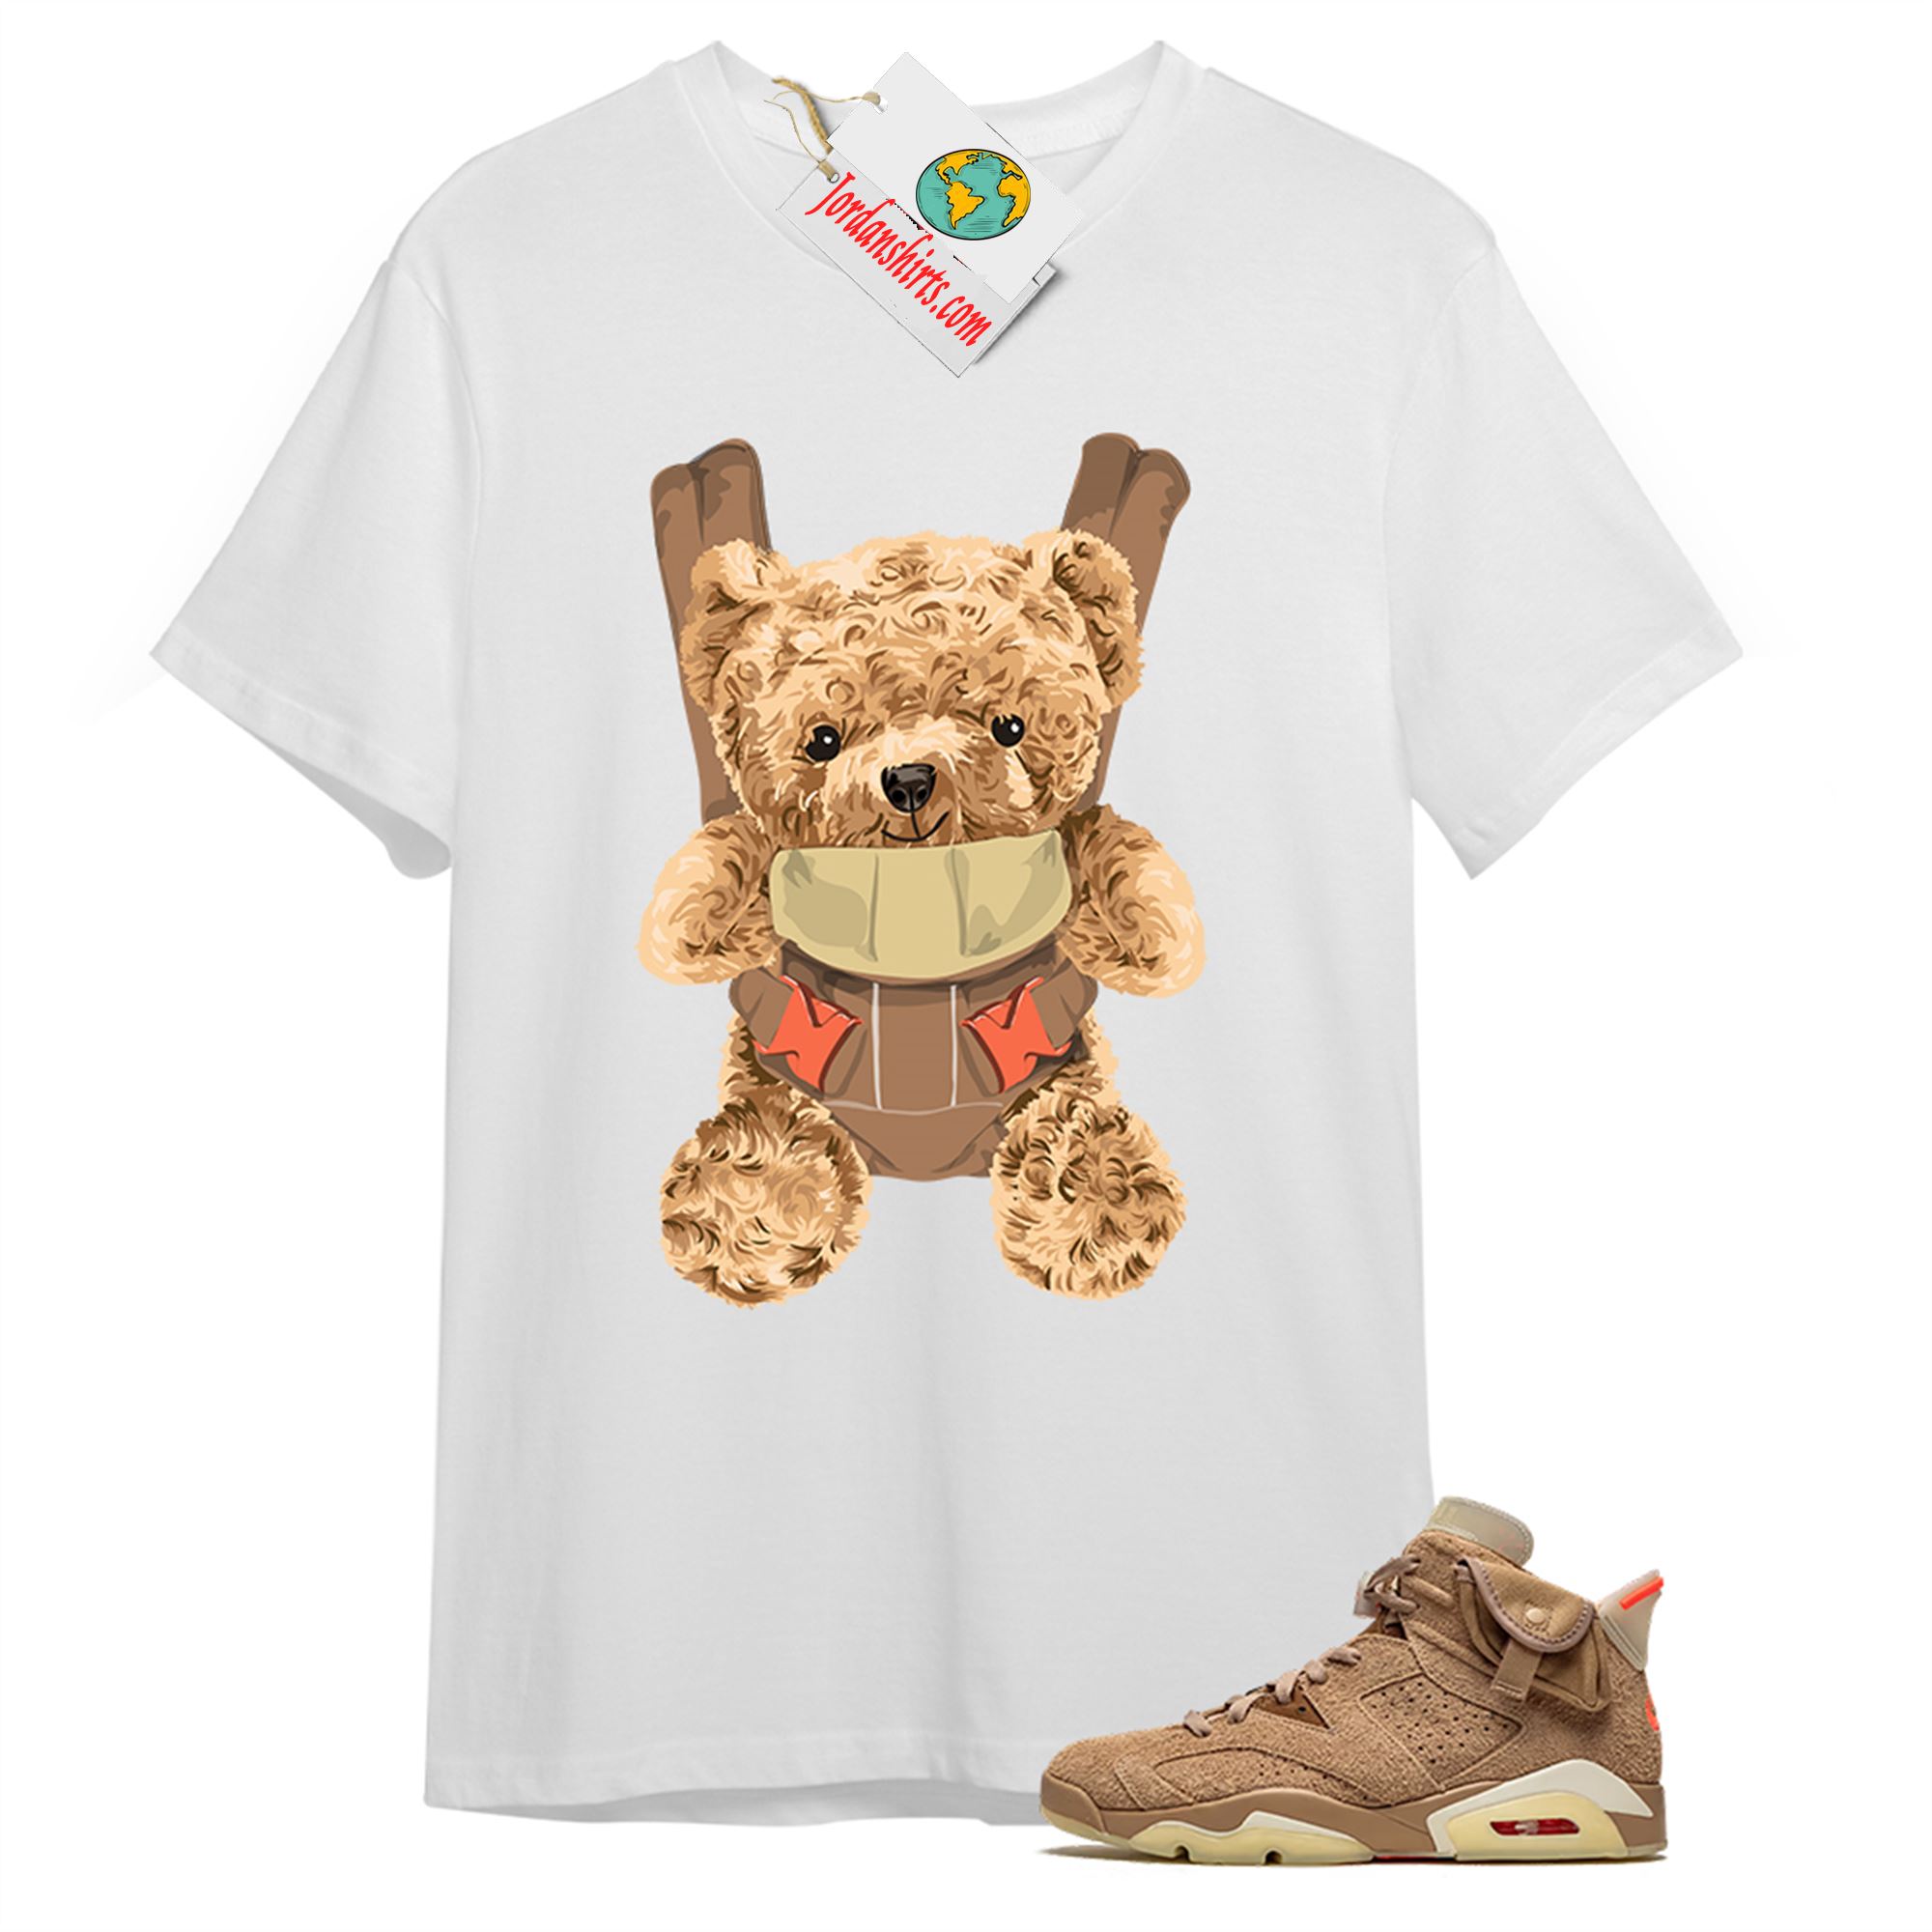 Jordan 6 Shirt, Teddy Bear Bag White T-shirt Air Jordan 6 Travis Scott 6s Plus Size Up To 5xl